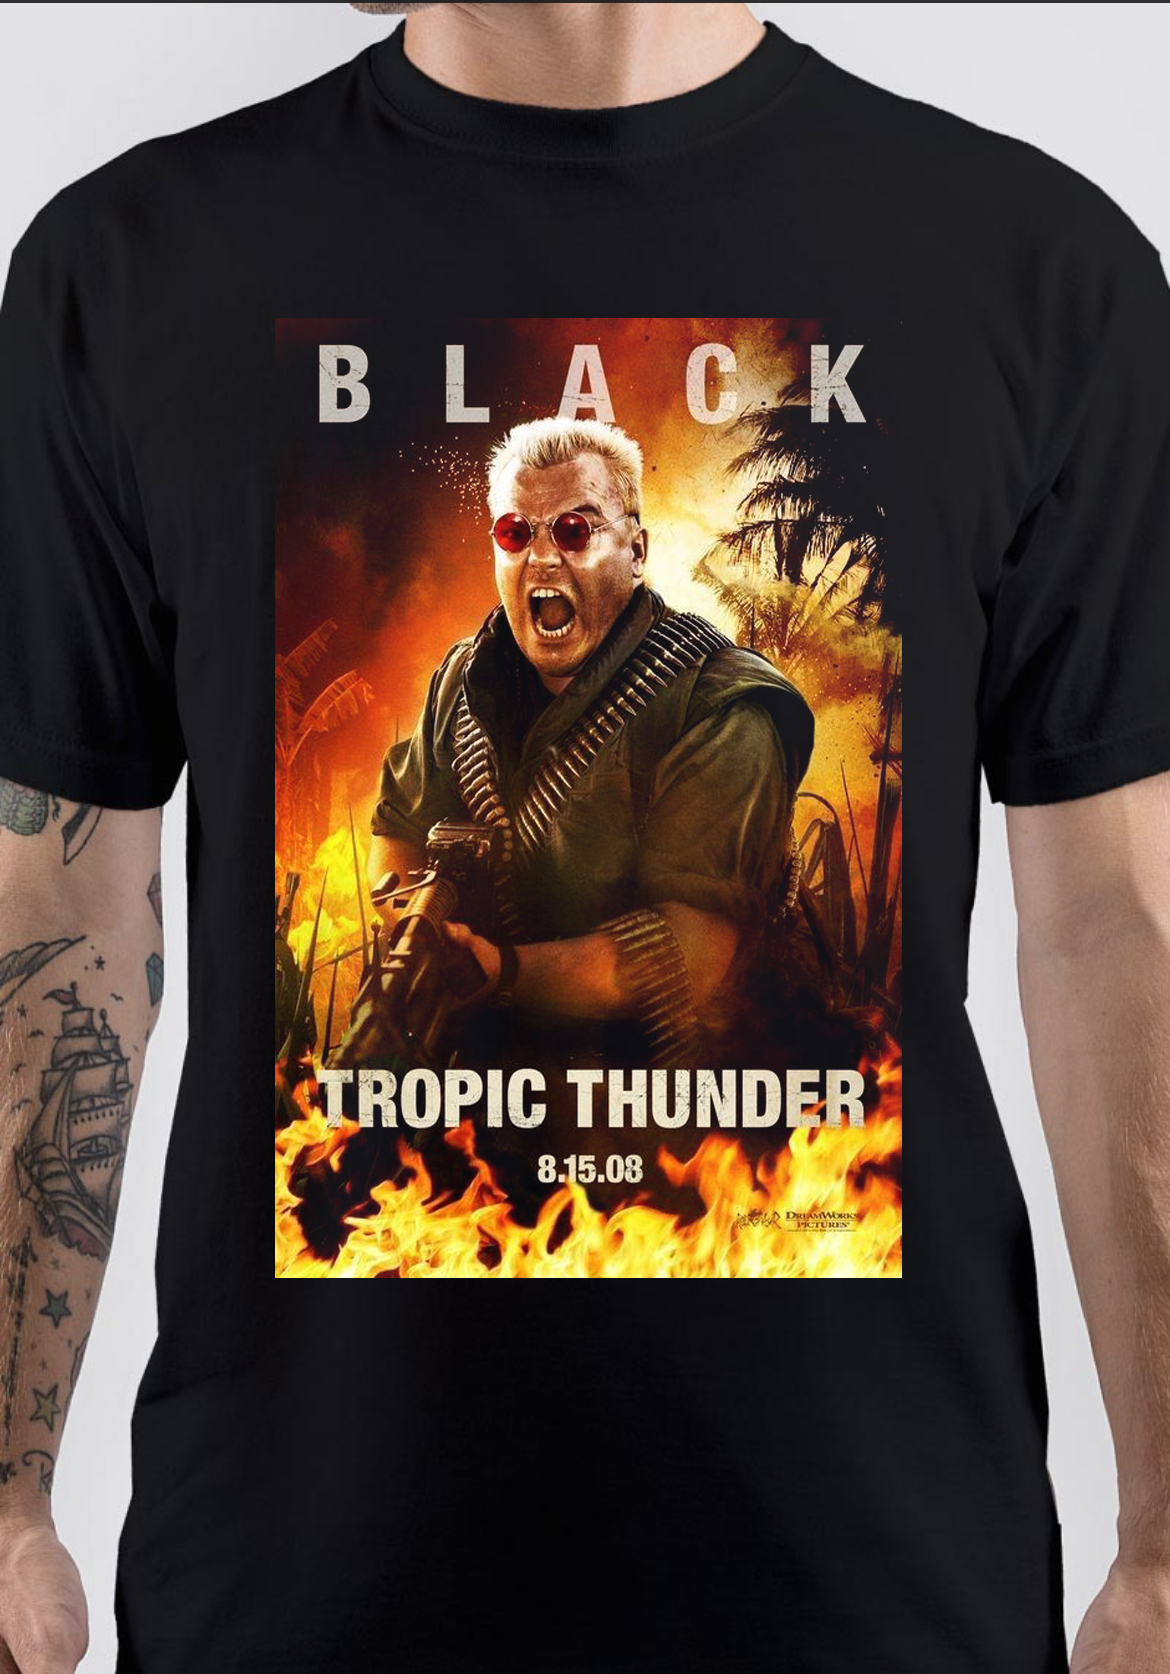 Tropic Thunder T-Shirt And Merchandise